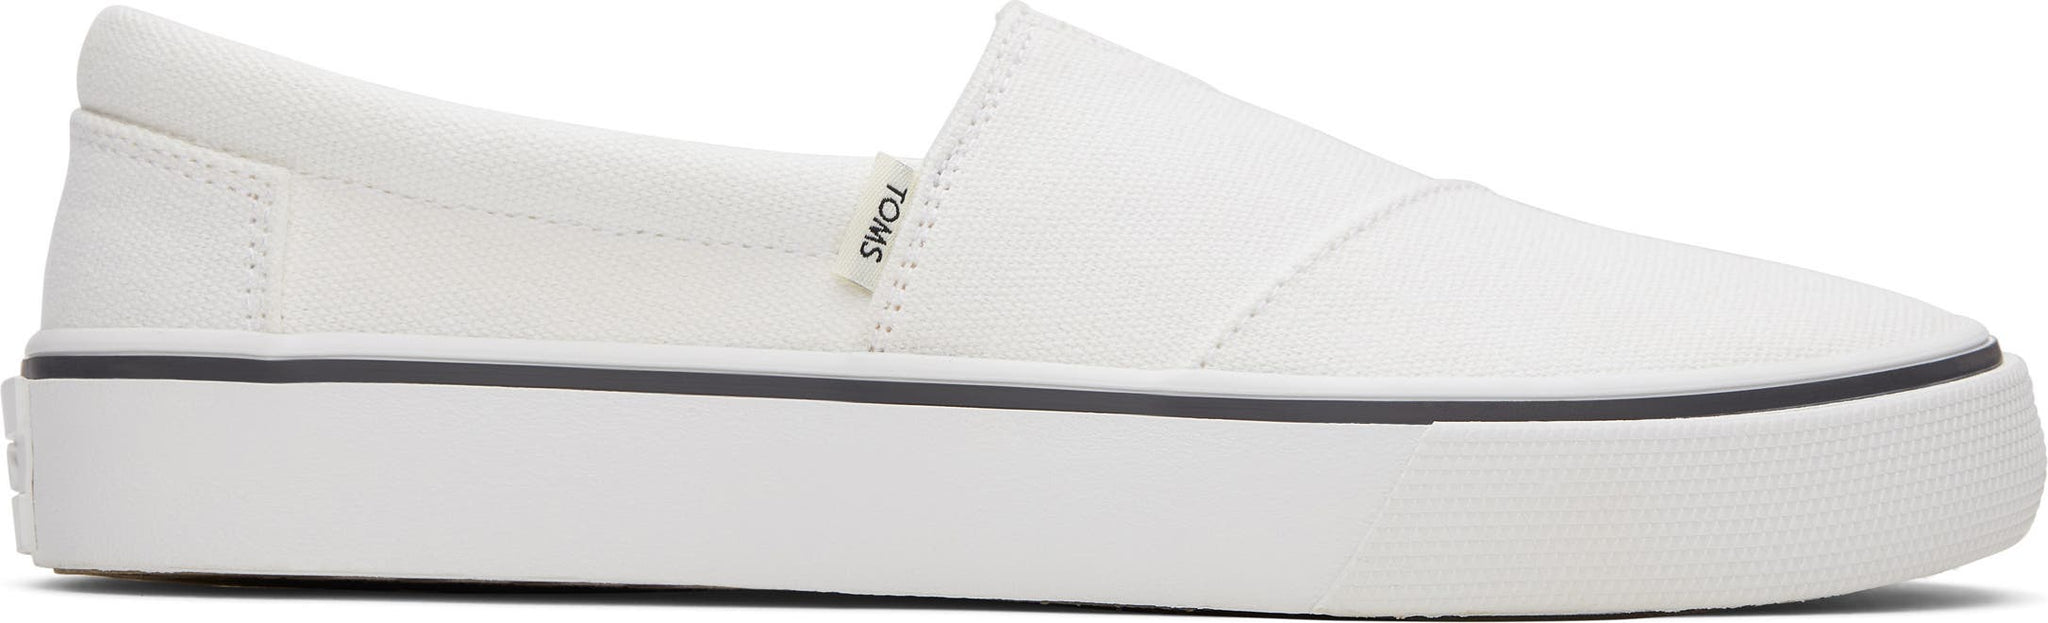 TOMS Alpargata Fenix Slip-On Sneaker, Alternate, color, WHITE